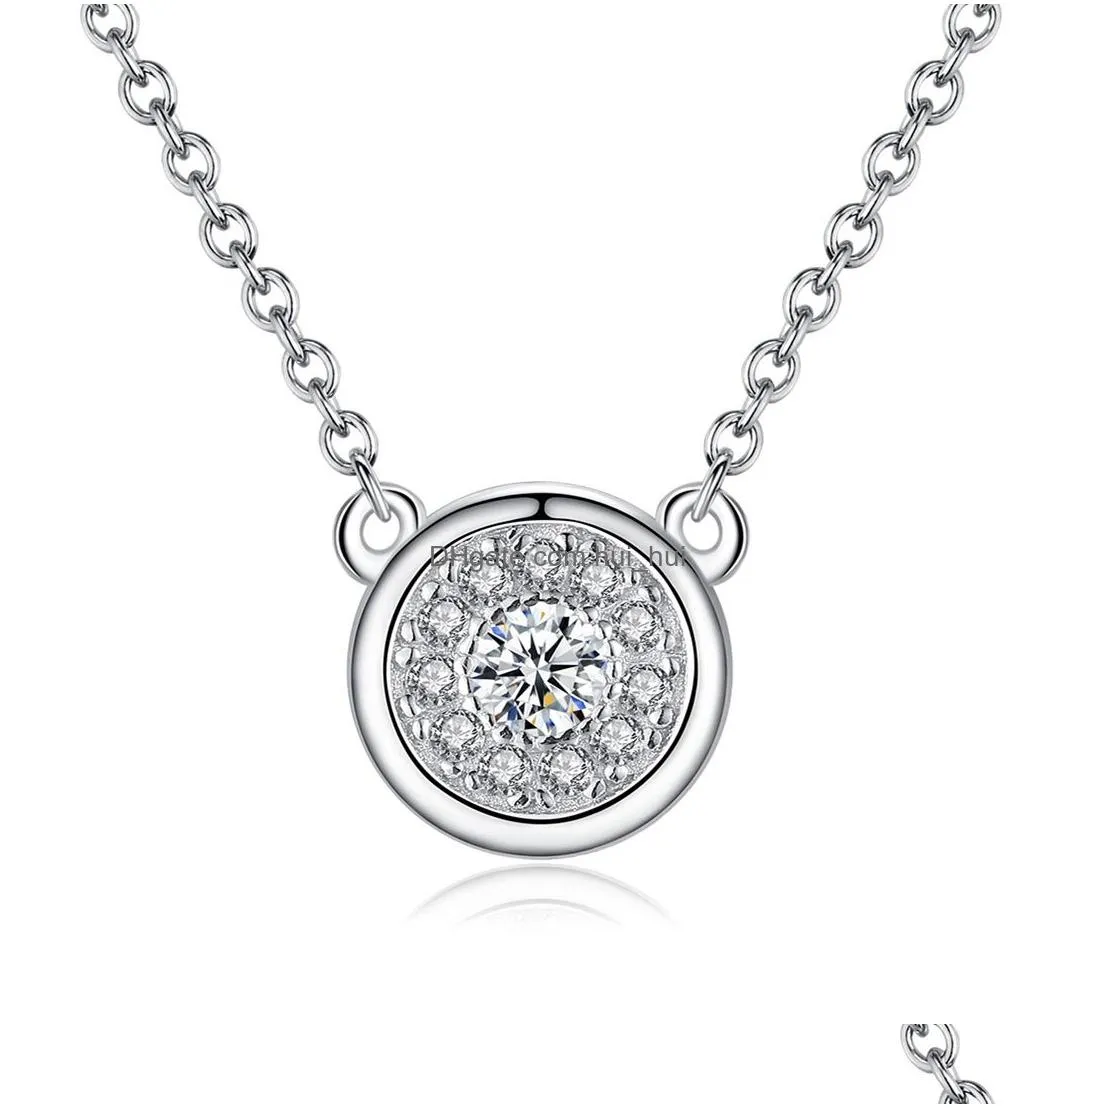 xb2v pendant necklaces designer cute bear high-end s925 silver pendant korean fashion women micro-set zircon collar chain necklace jewelry